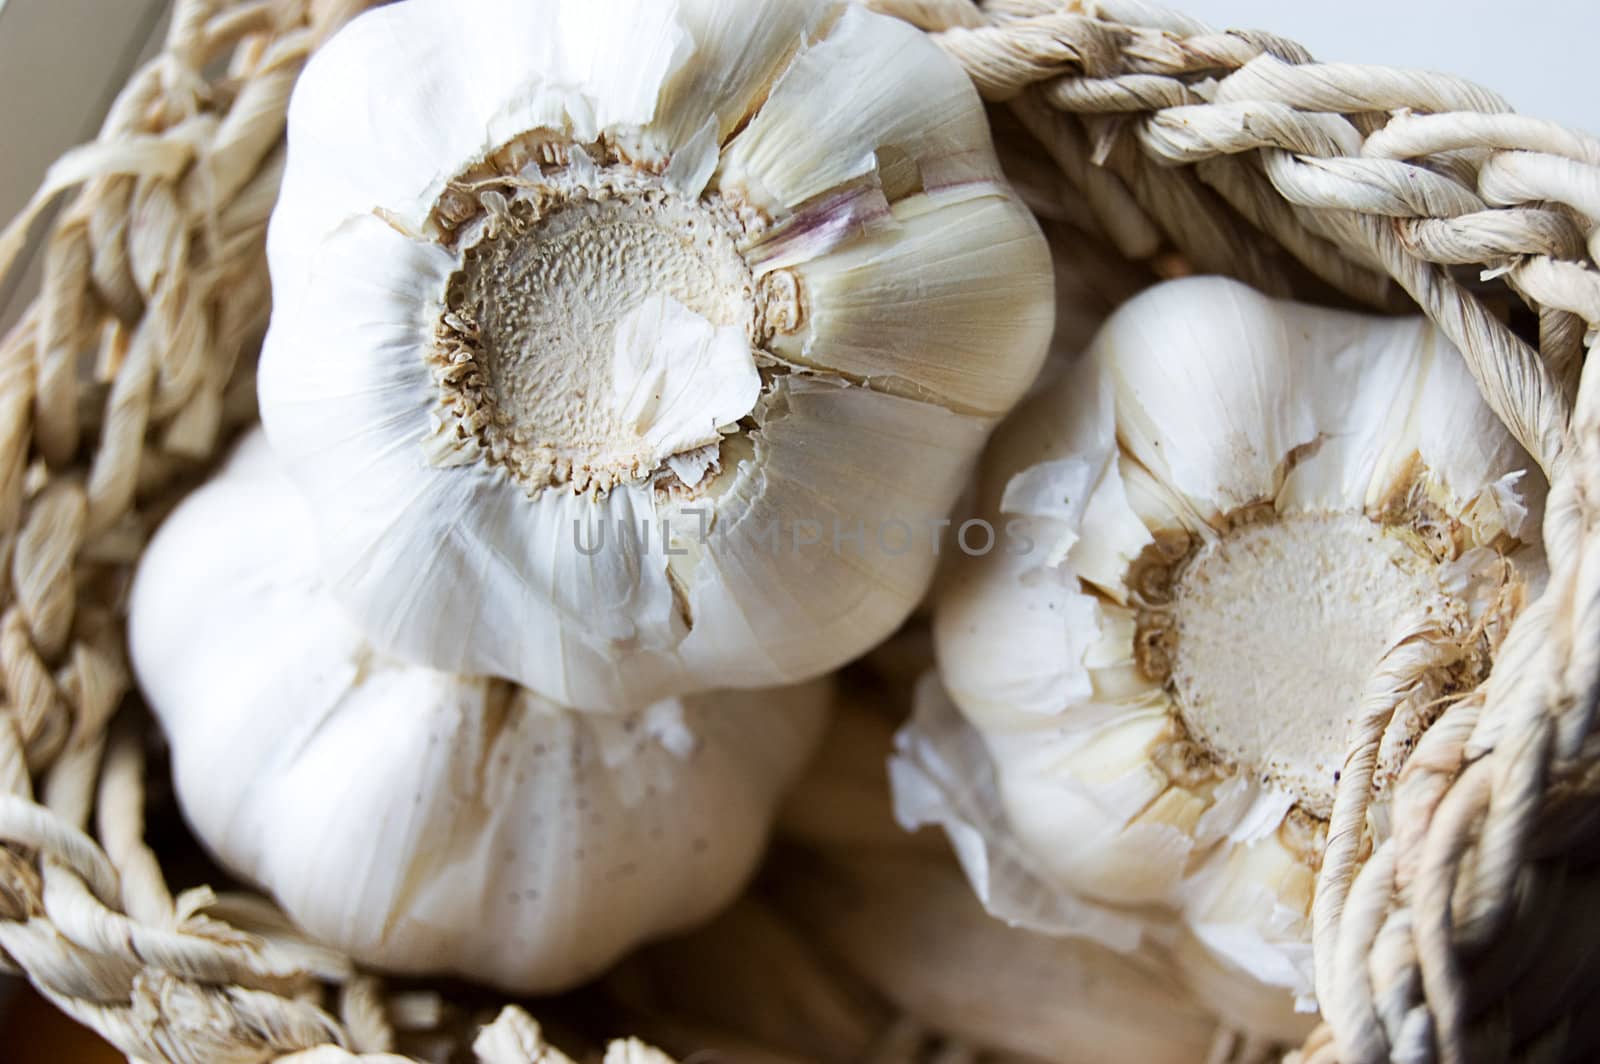 Some white garlic bulbs in basket